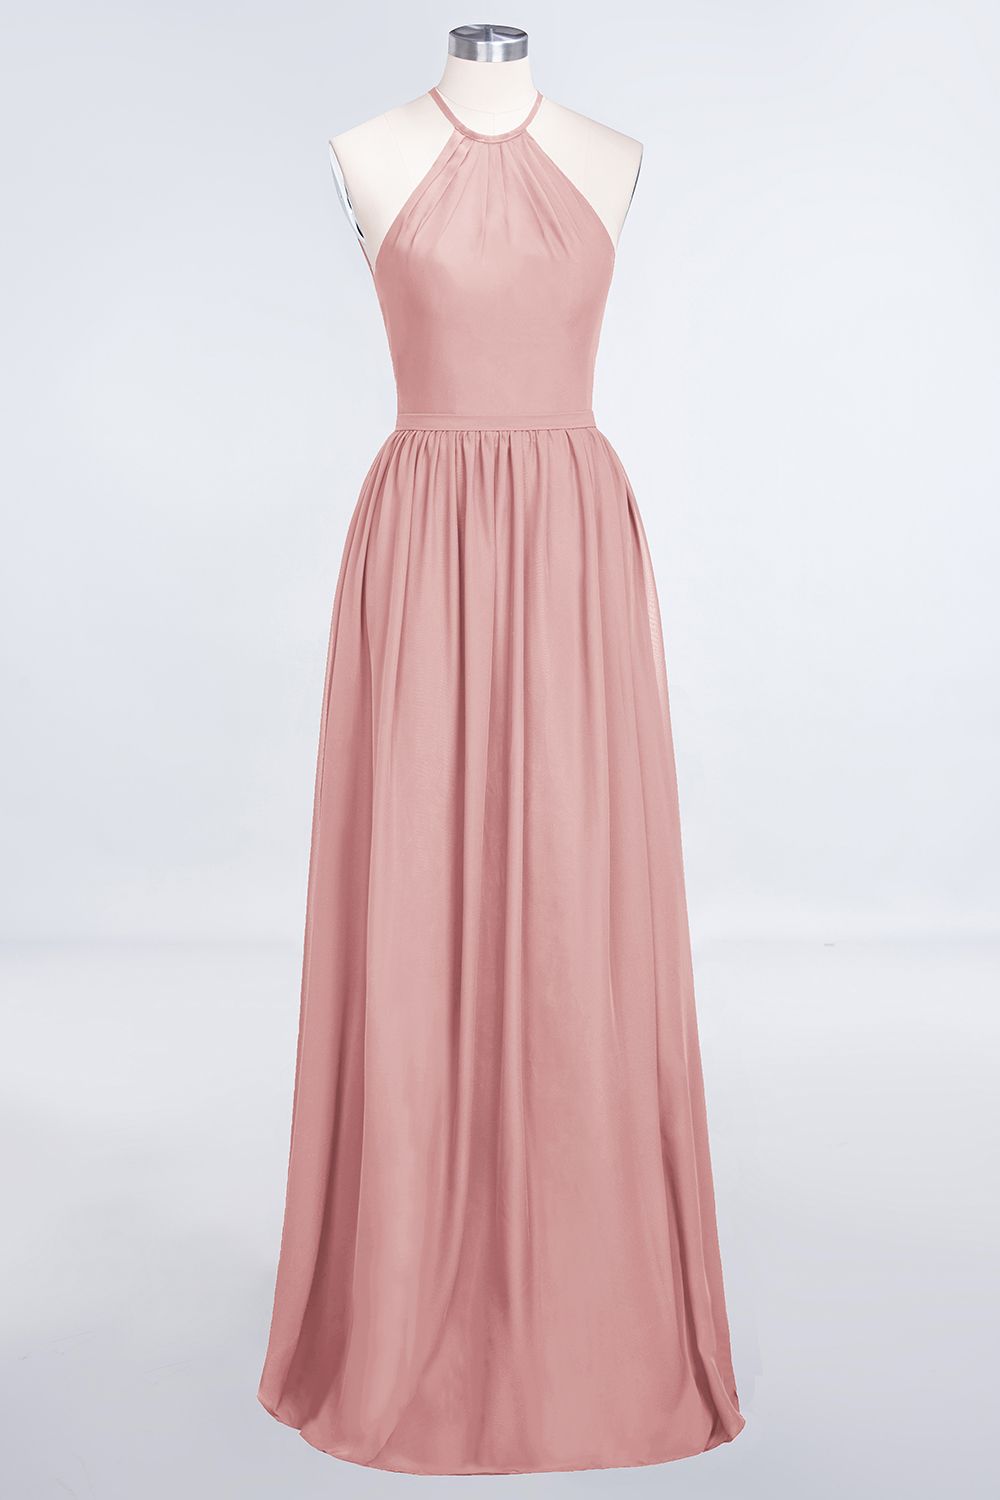 Affordable Halter Sleeveless Long Burgundy Bridesmaid Dress with Ruffle-27dress